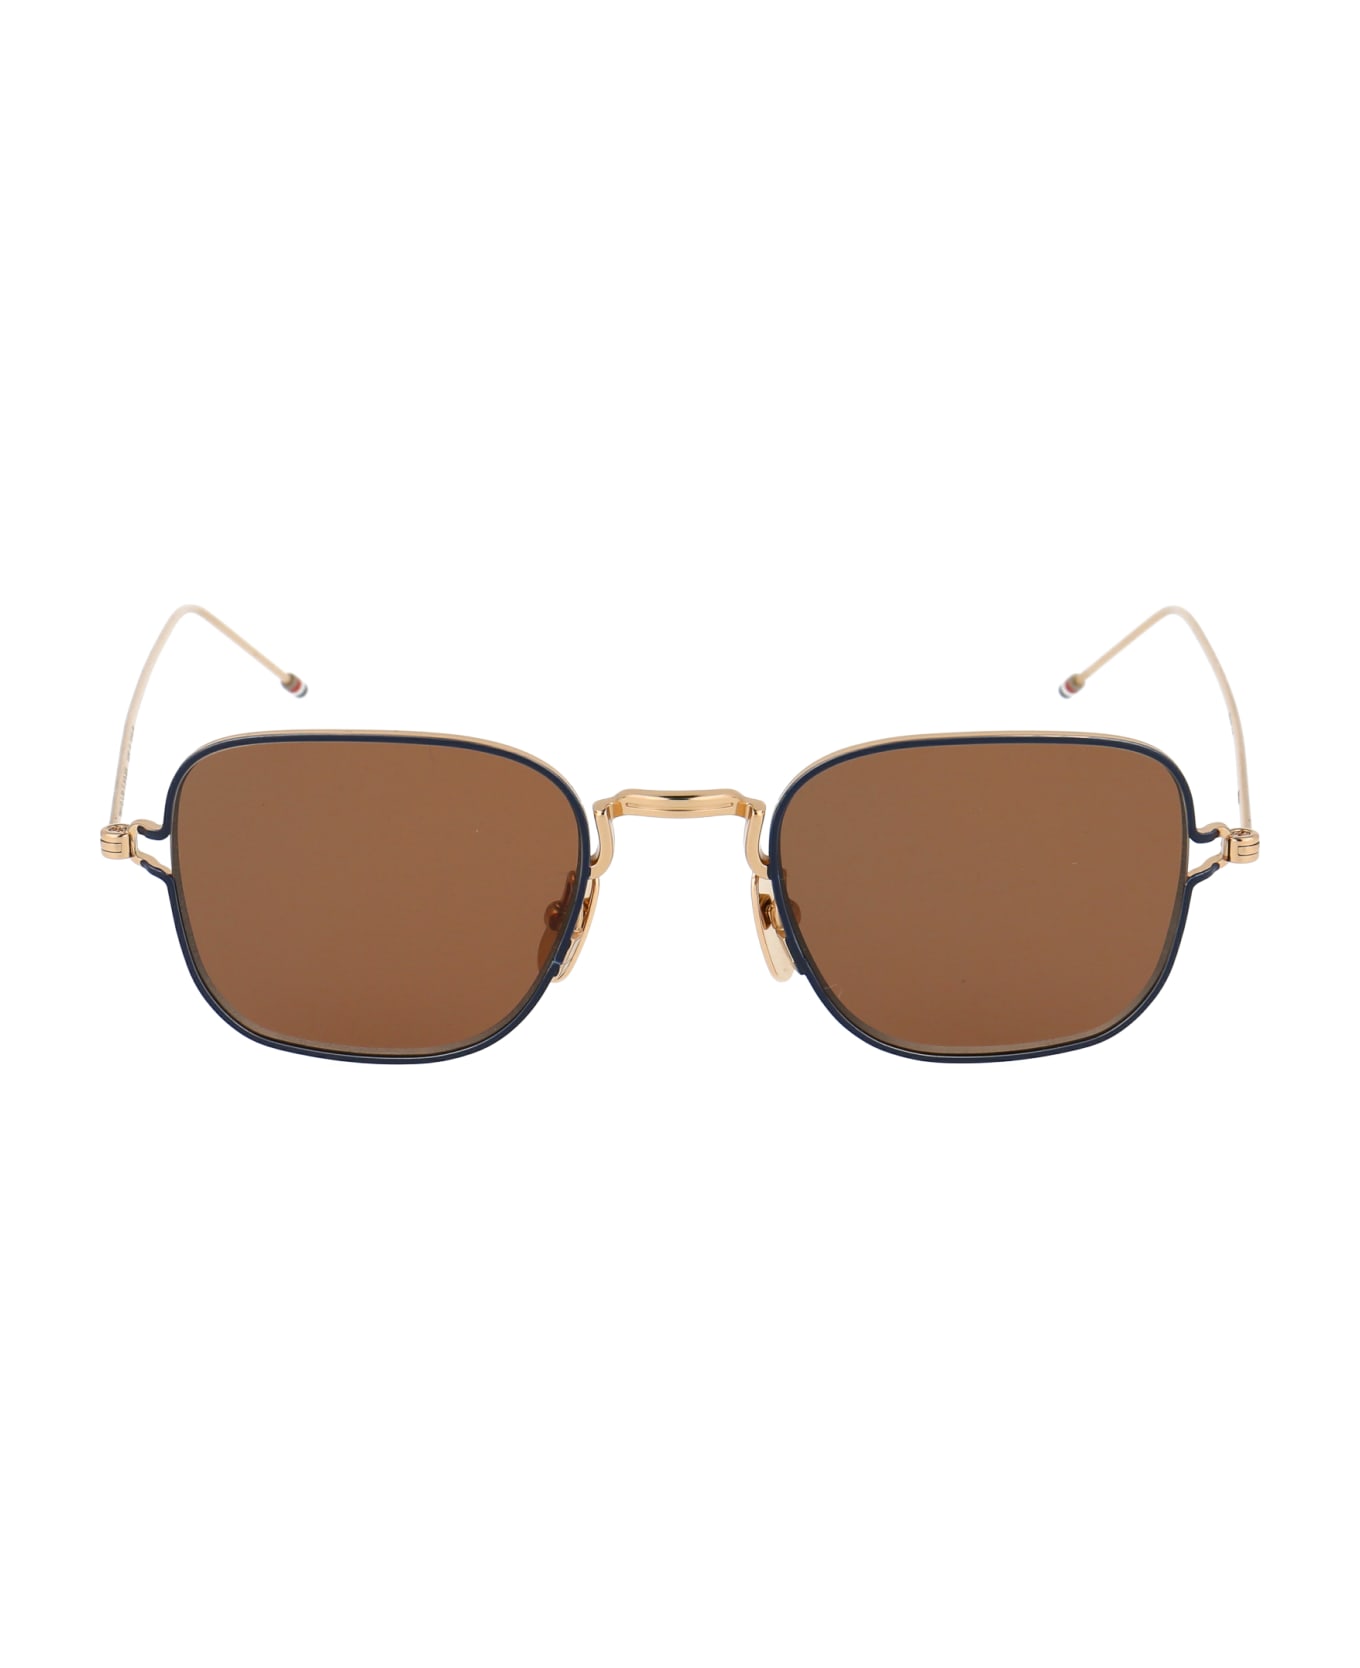 Thom Browne Tb-116 Sunglasses - WHITE GOLD - NAVY W/ DARK BROWN サングラス